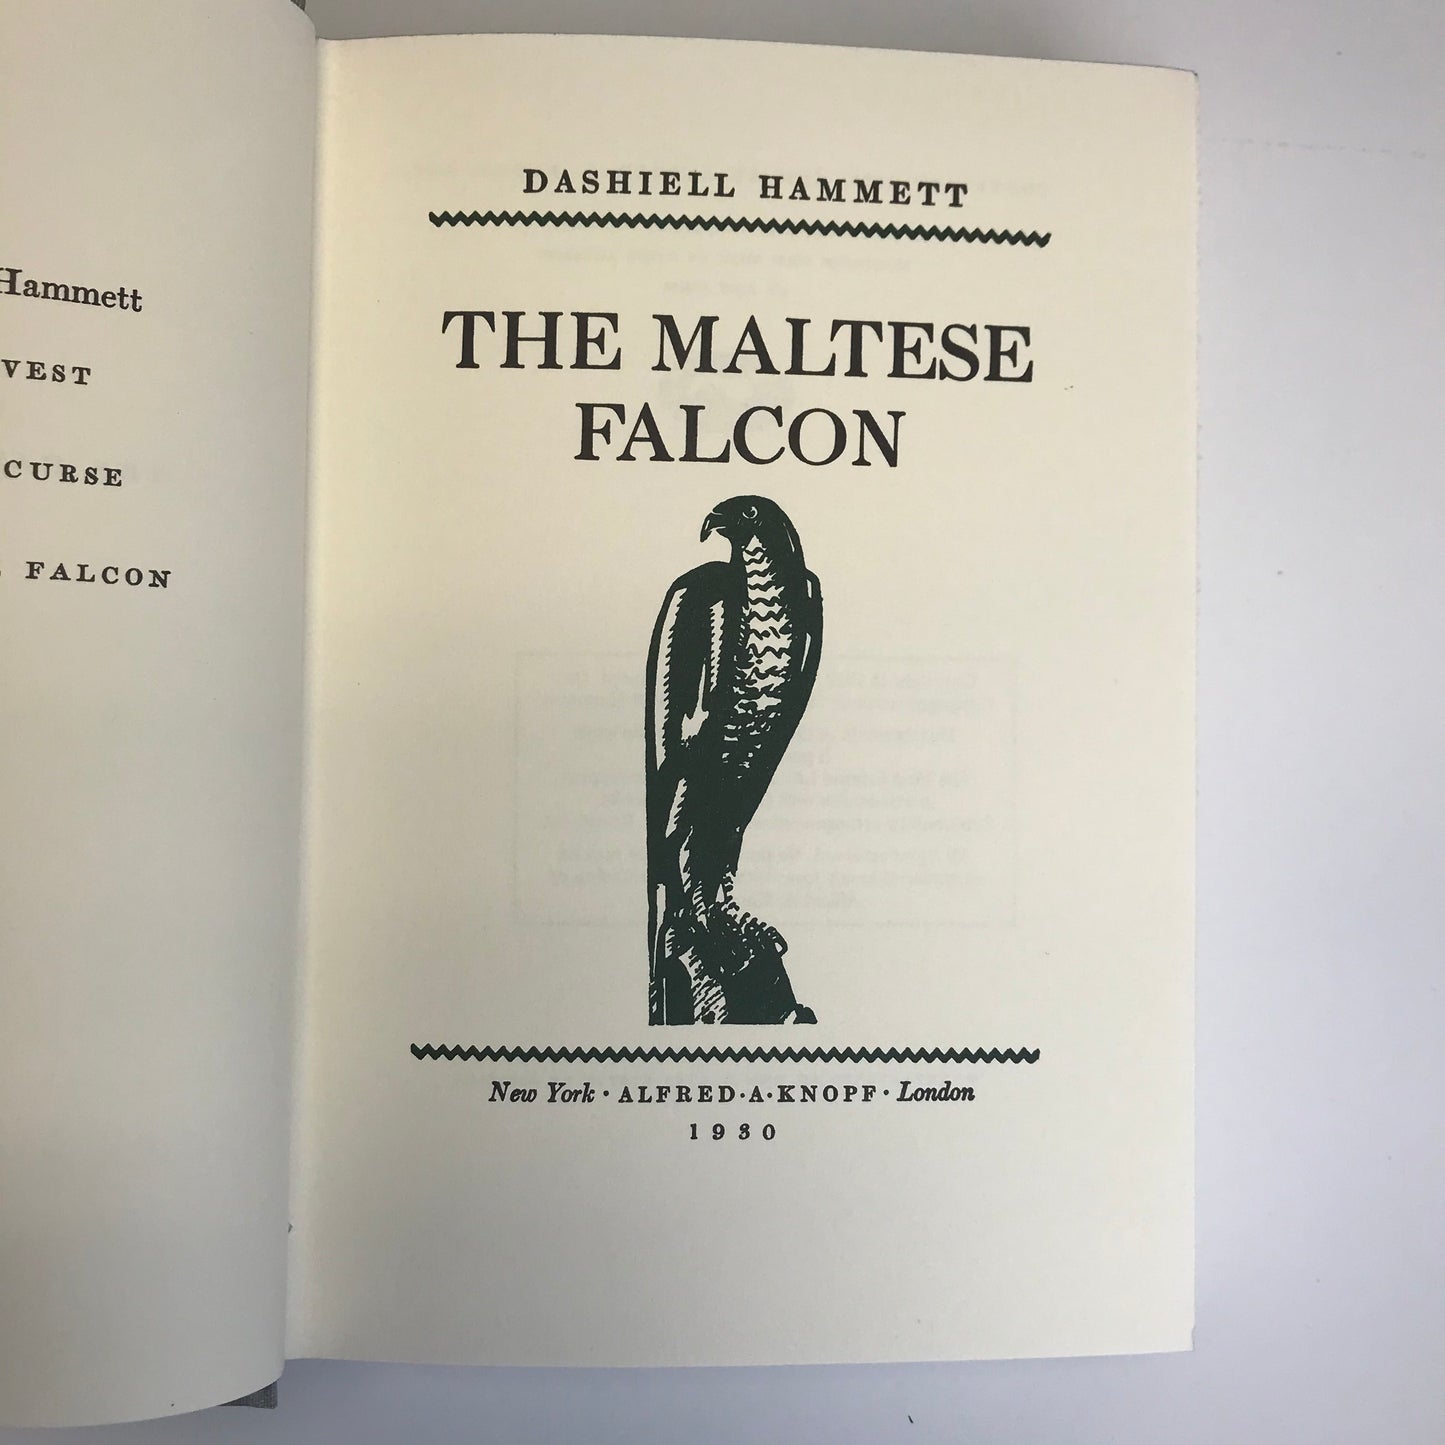 The Maltese Falcon - Dashiell Hammet - Re-Issue 1st Edition Facsimile - 1957